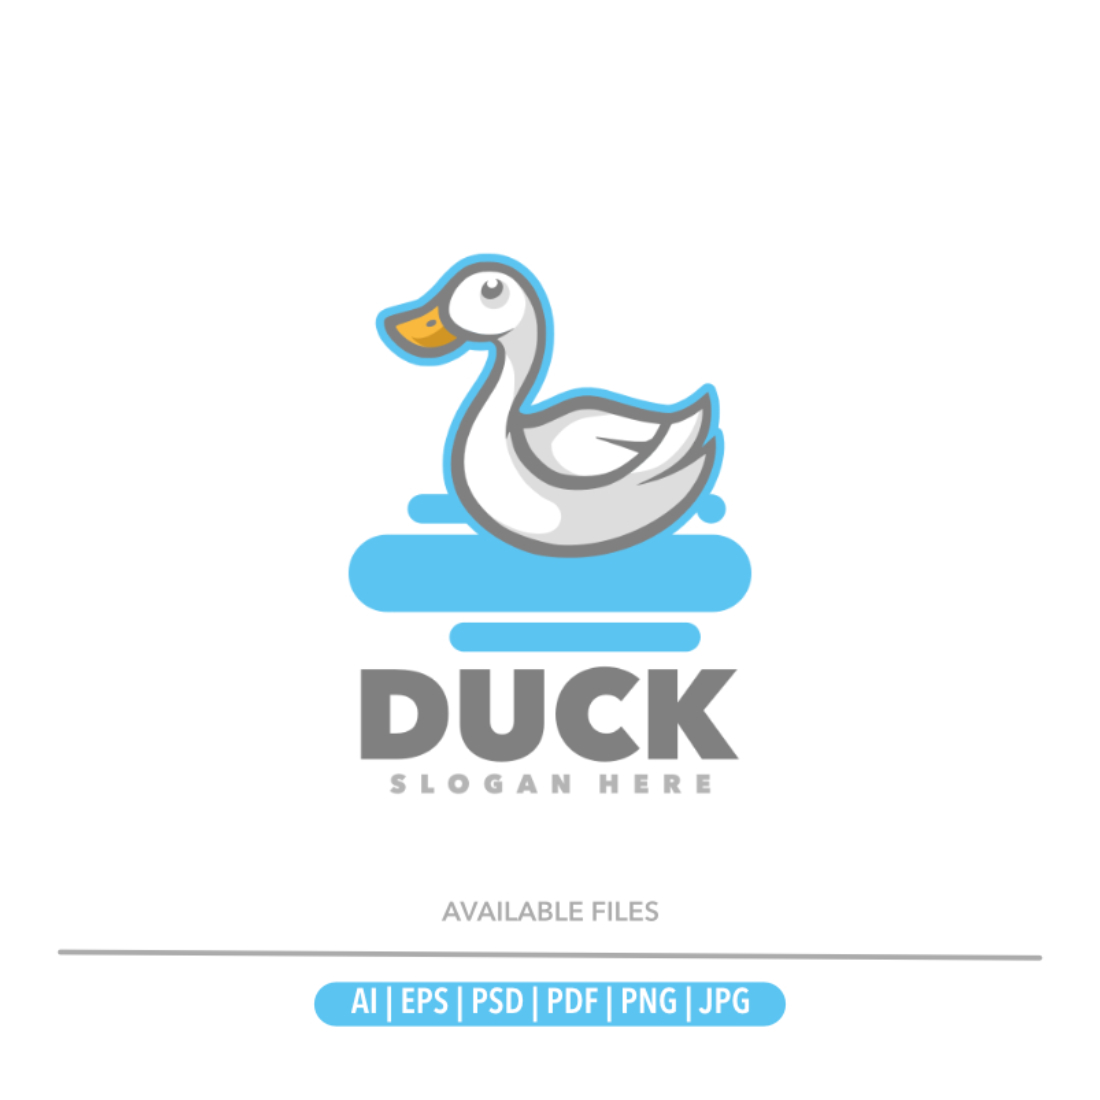 Duck cartoon logo template cover image.